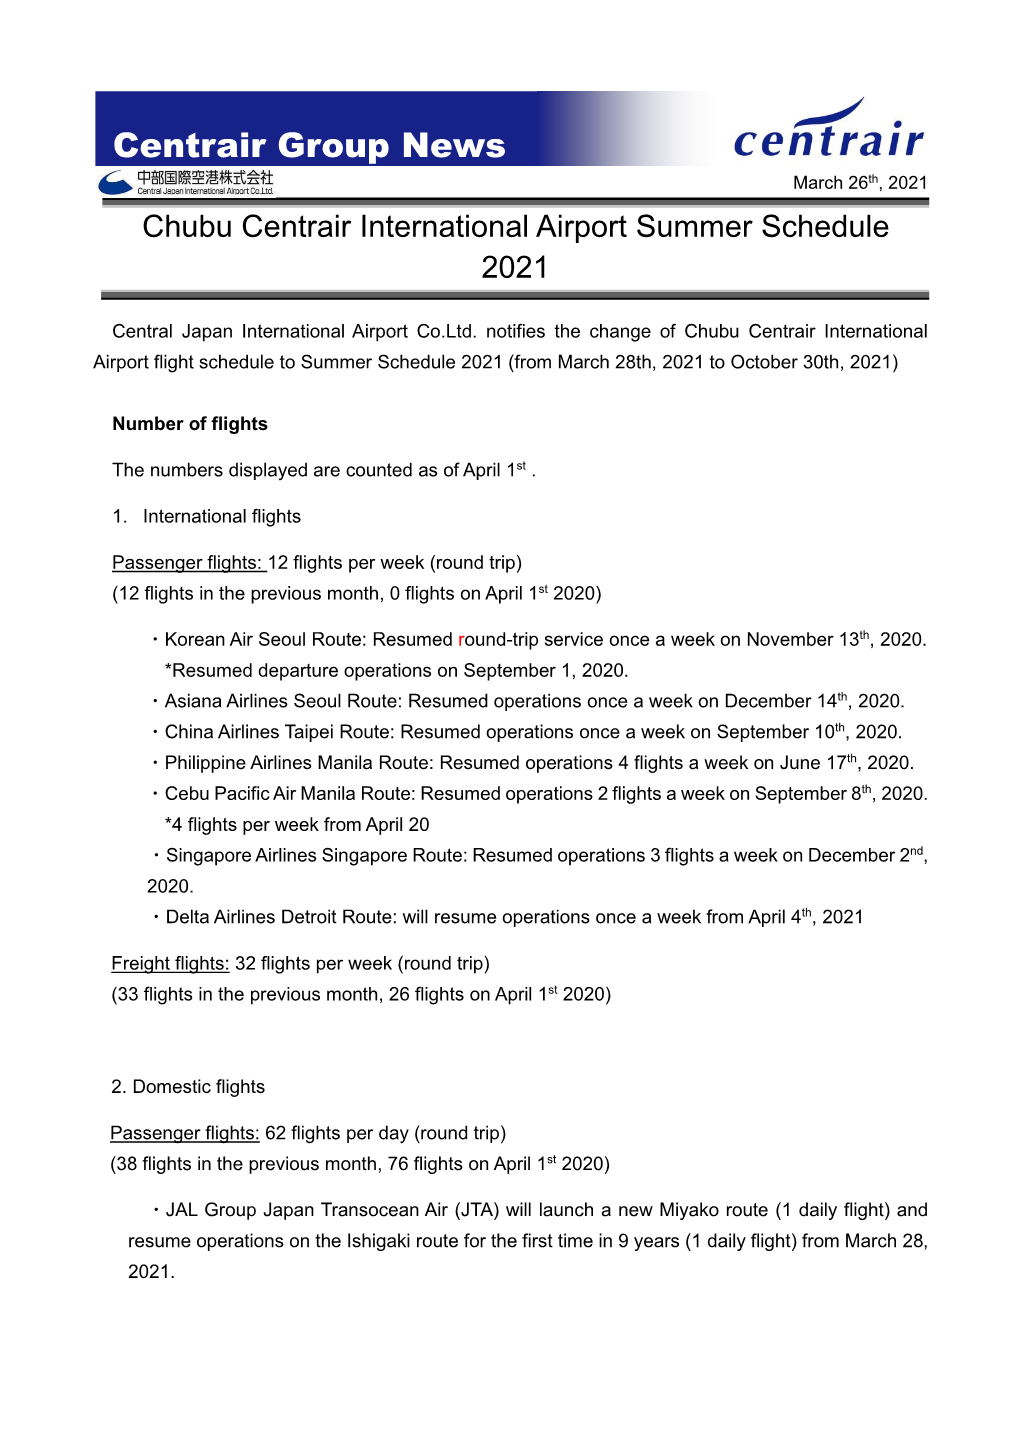 March 26, 2021 News Releasecorporate Informationachievements Chubu Centrair International Airport Summer Schedule 2021